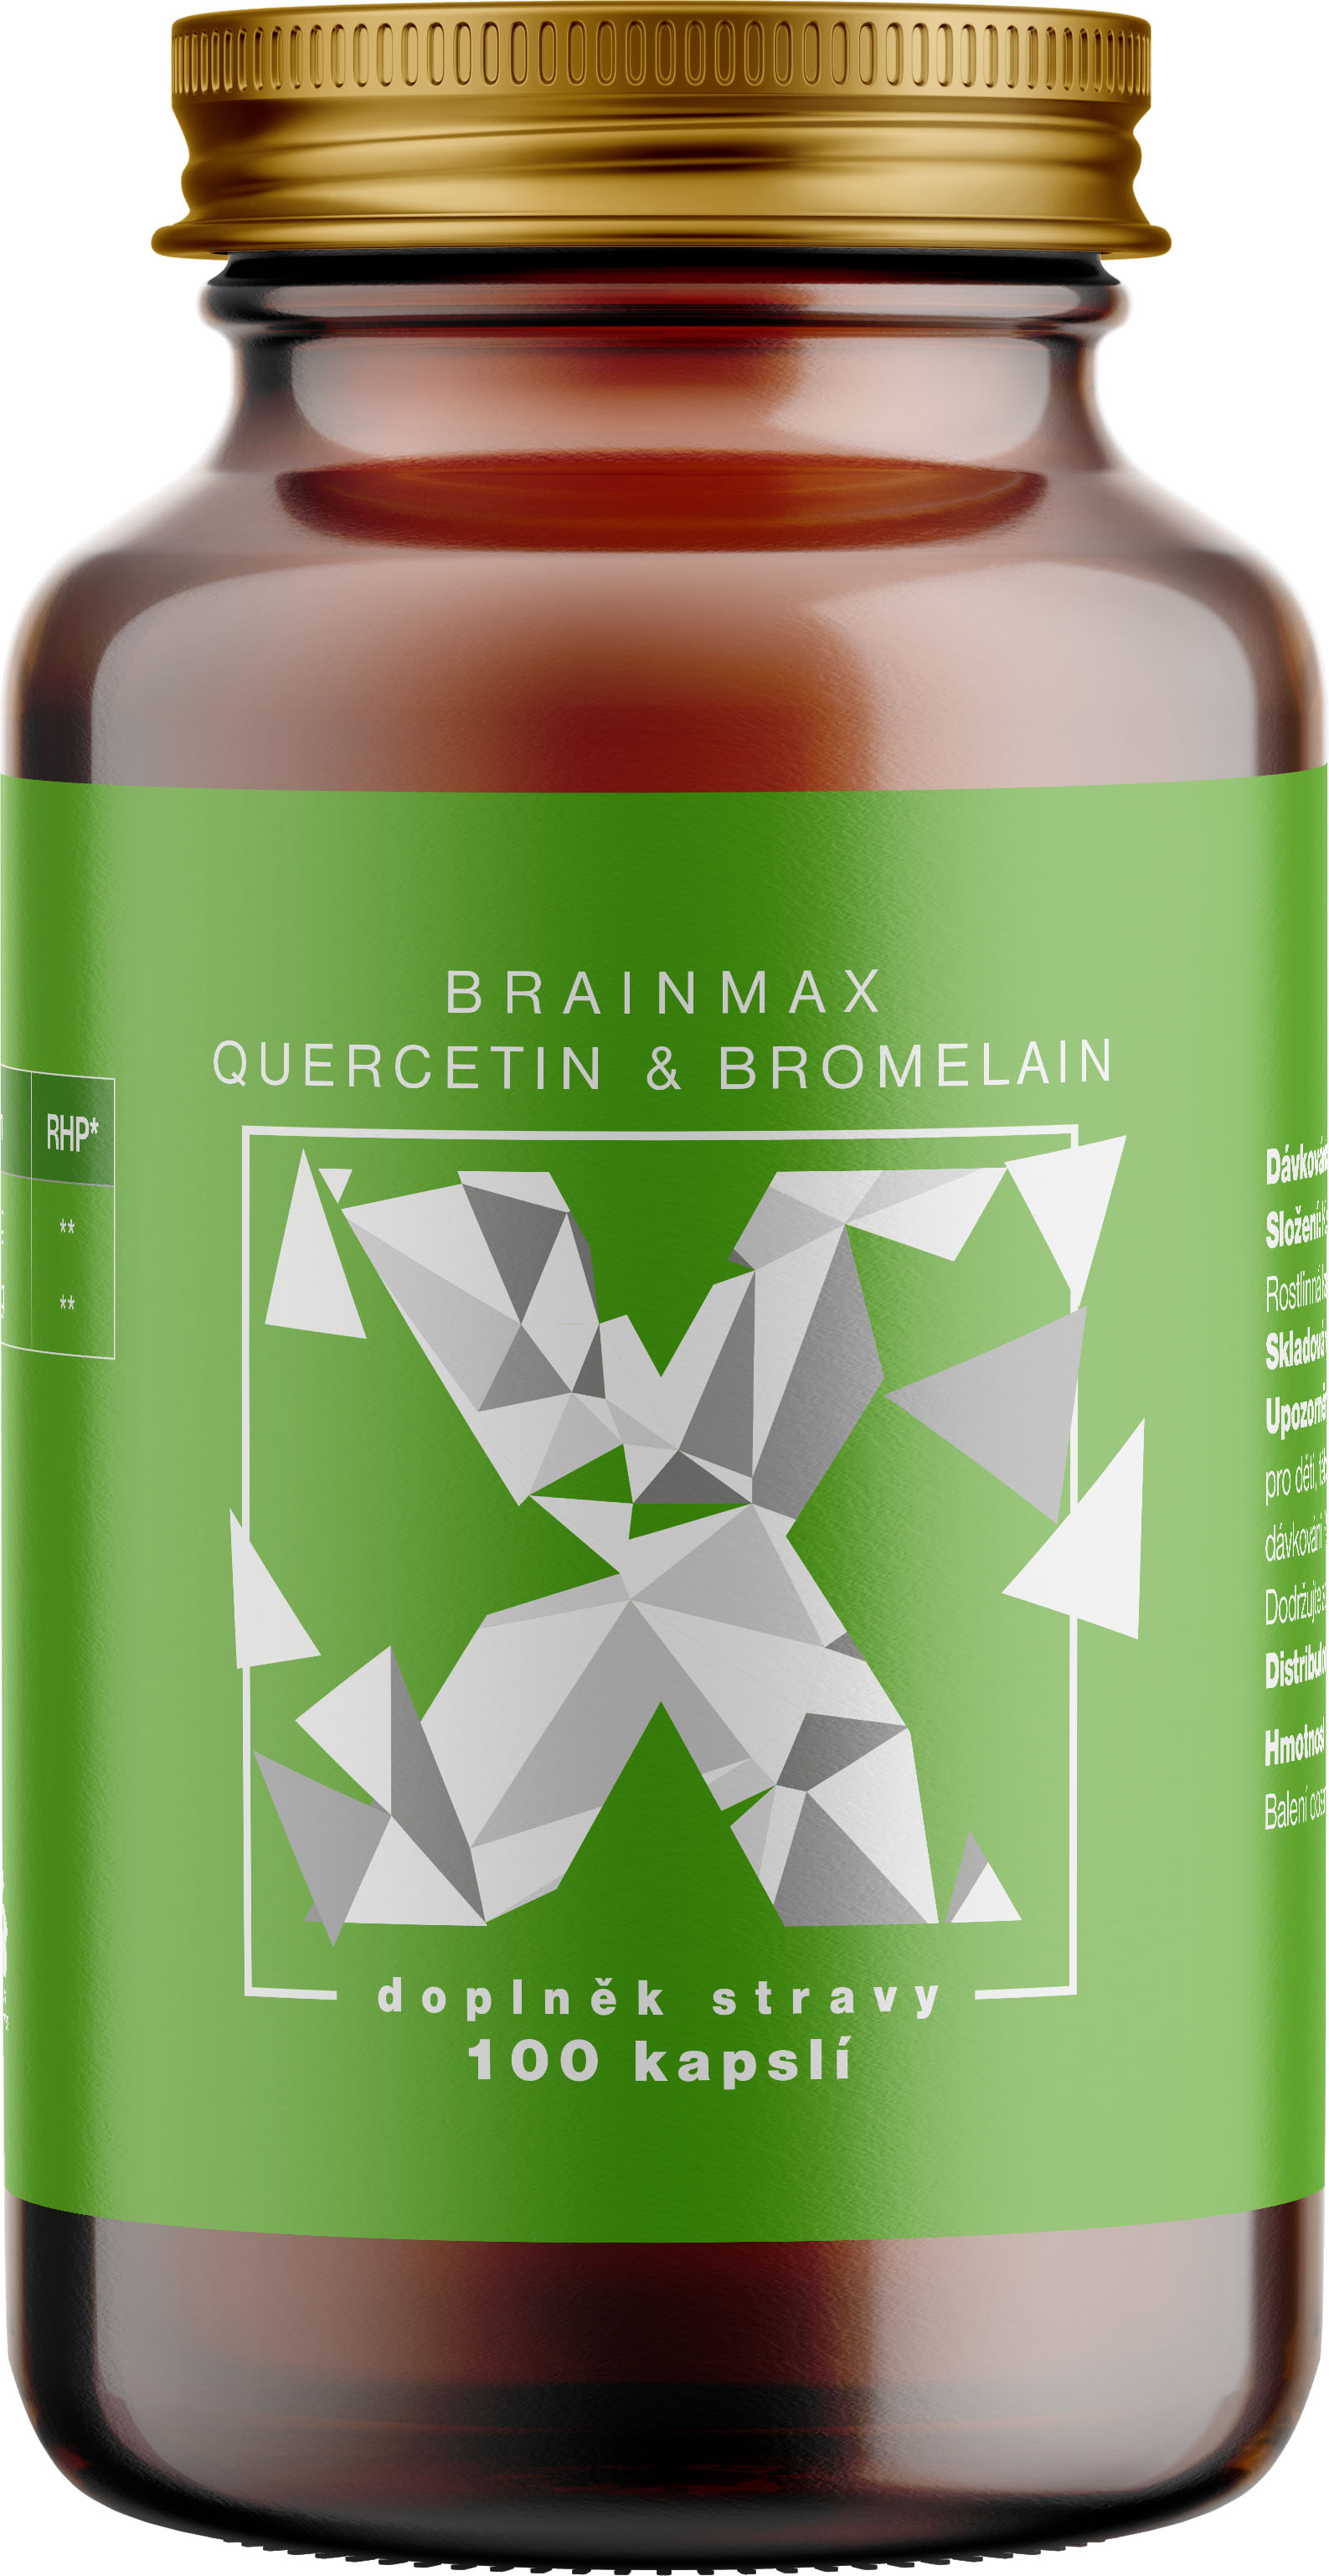 brainmarket product image